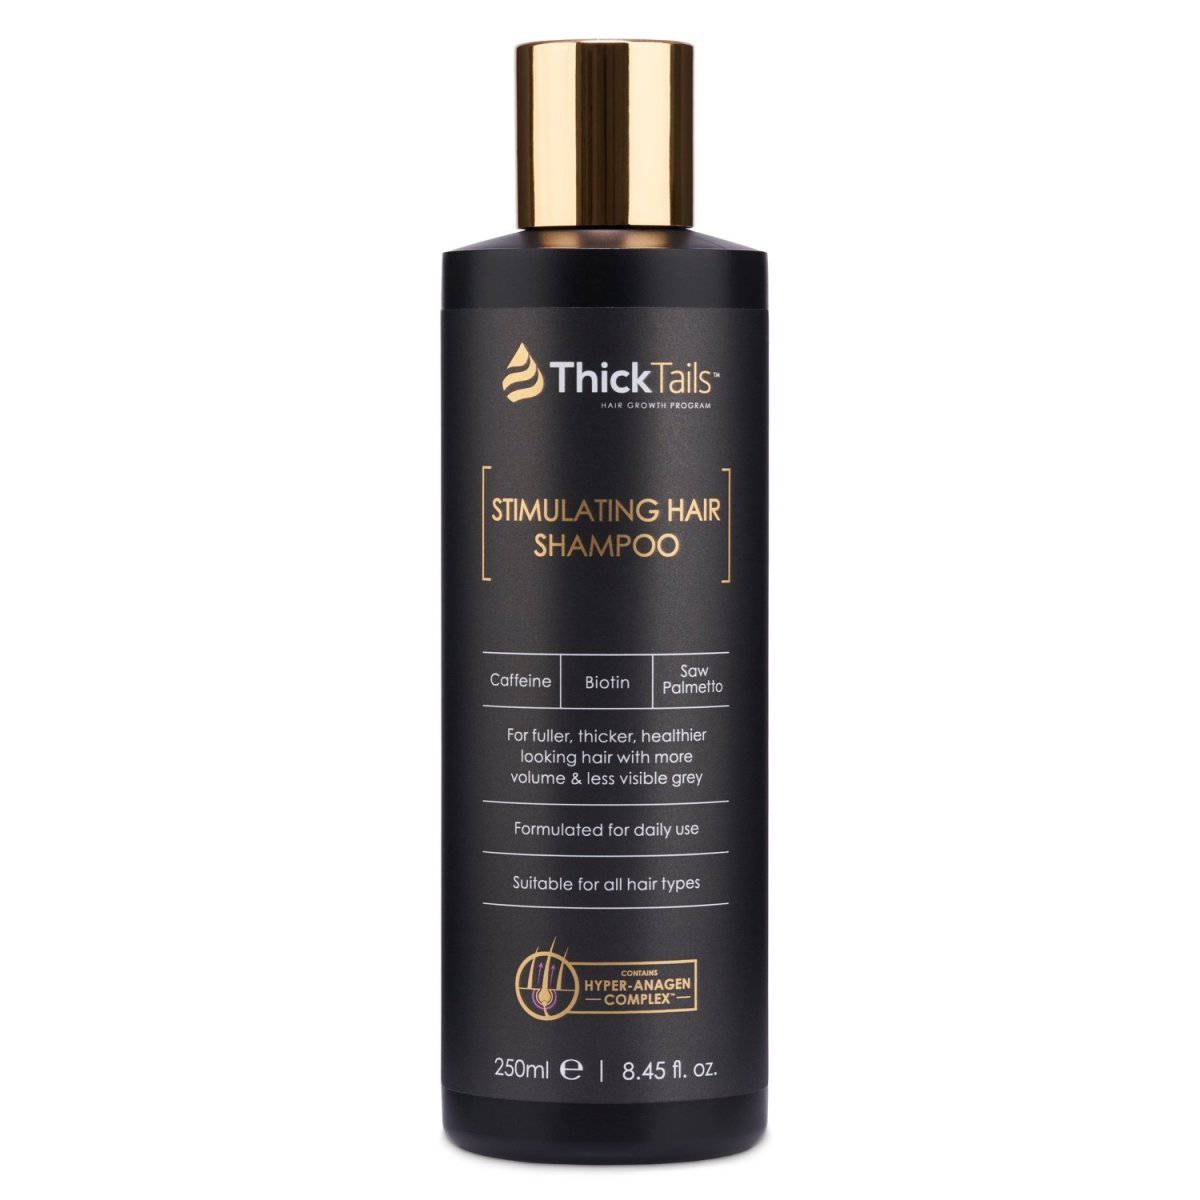 thicktails stimulating hair shampoo